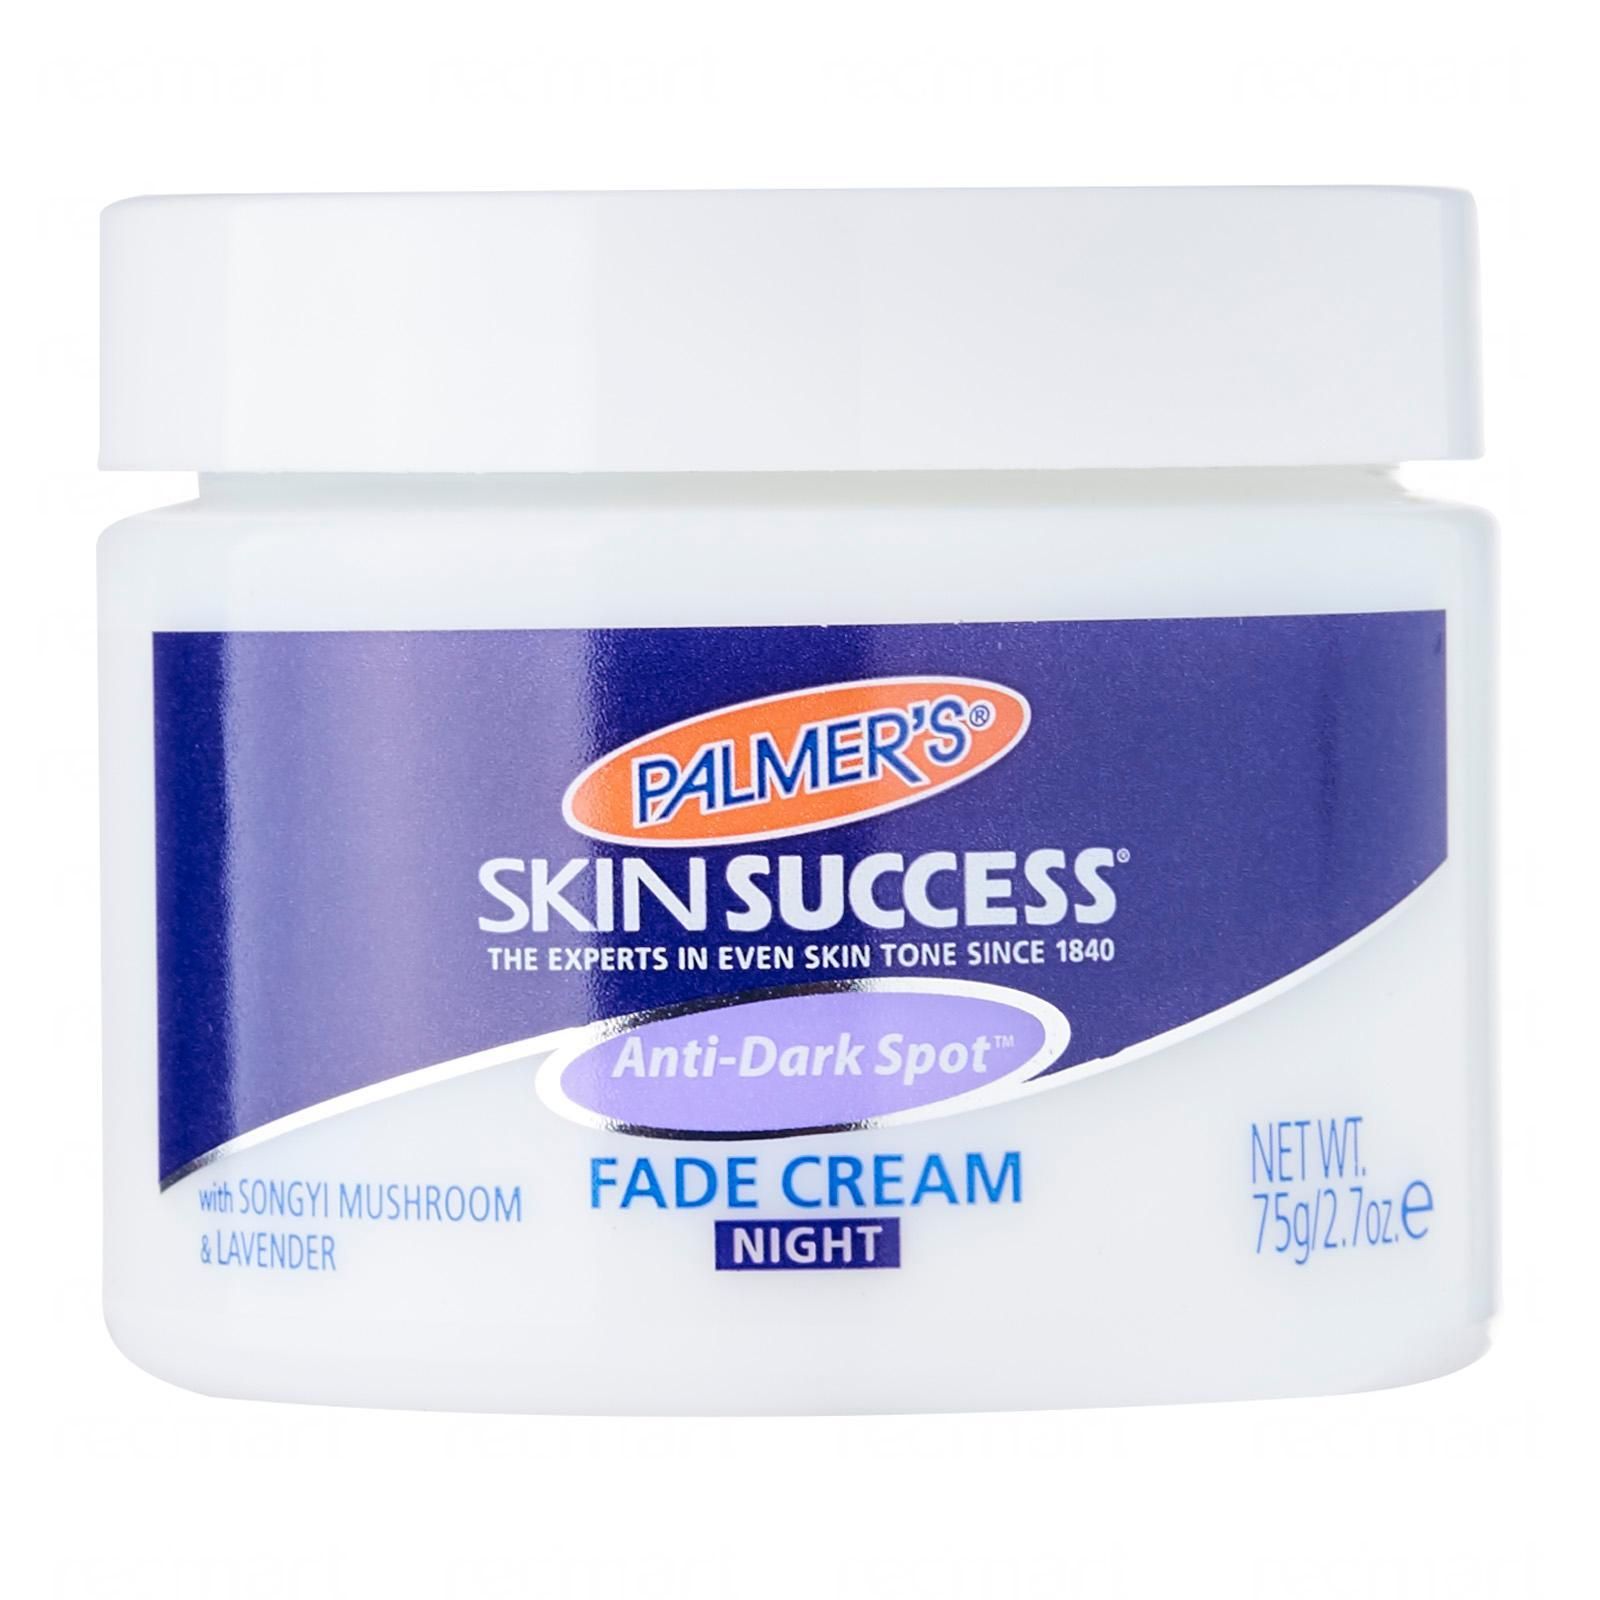 Palmer's Skin Success Anti-dark Spot Fade Cream Night - 75g